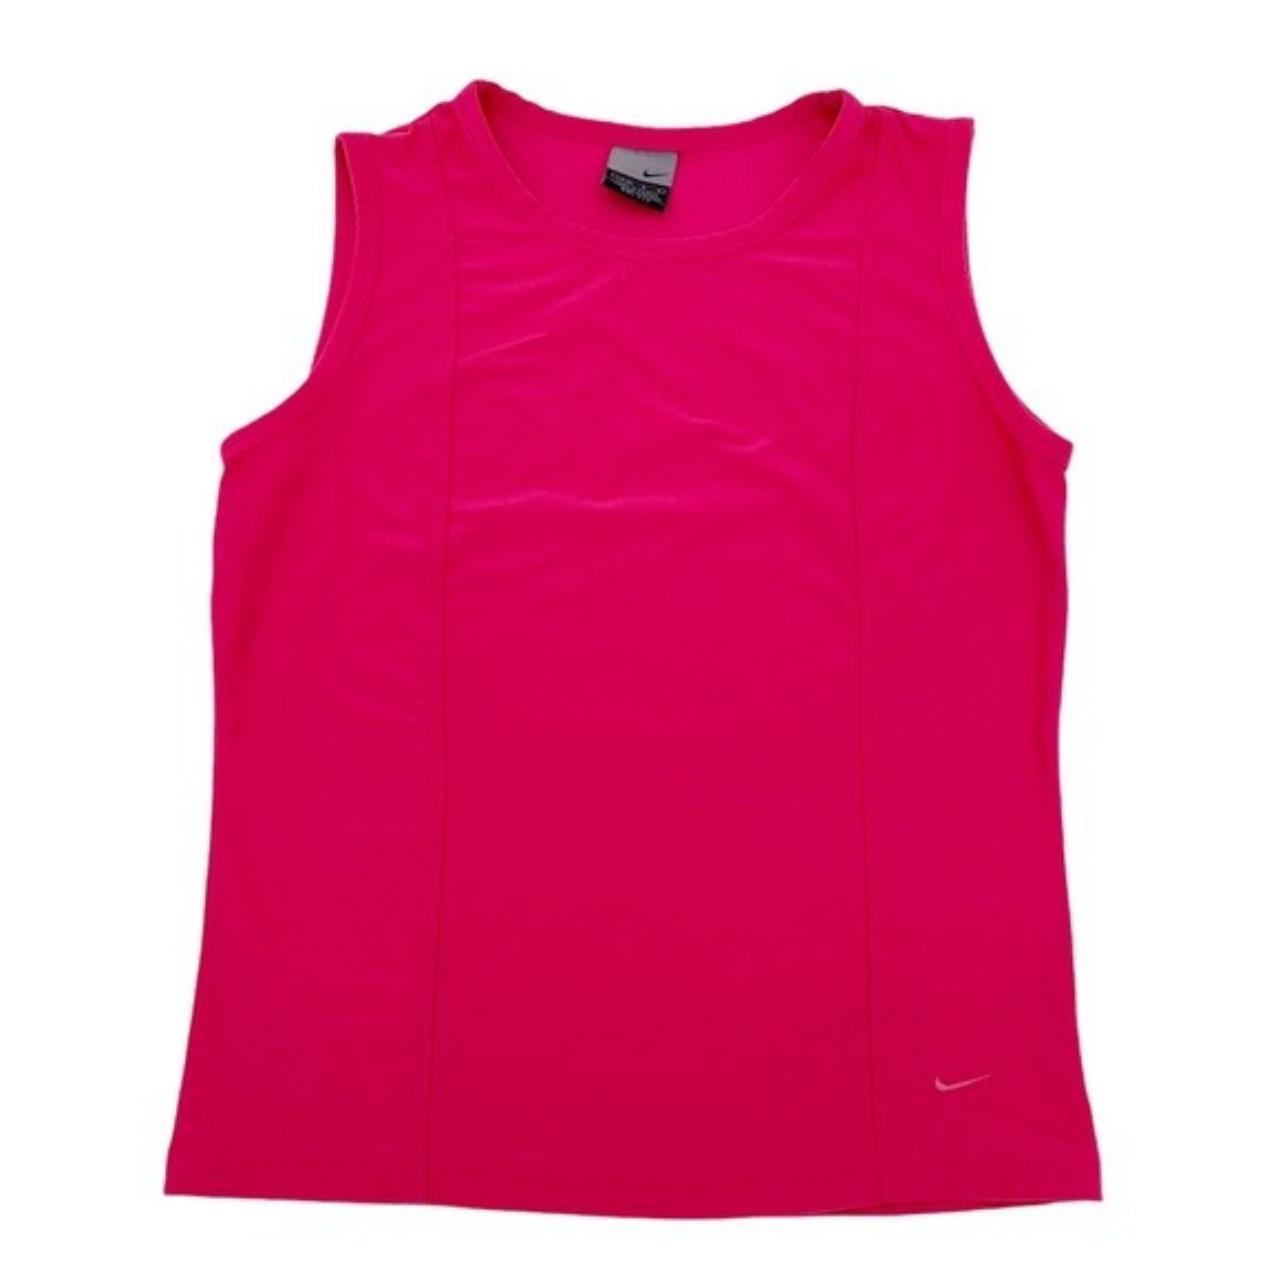 Lot of 14 Women's Dri Fit Workout Tank Tops Size Medium - clothing